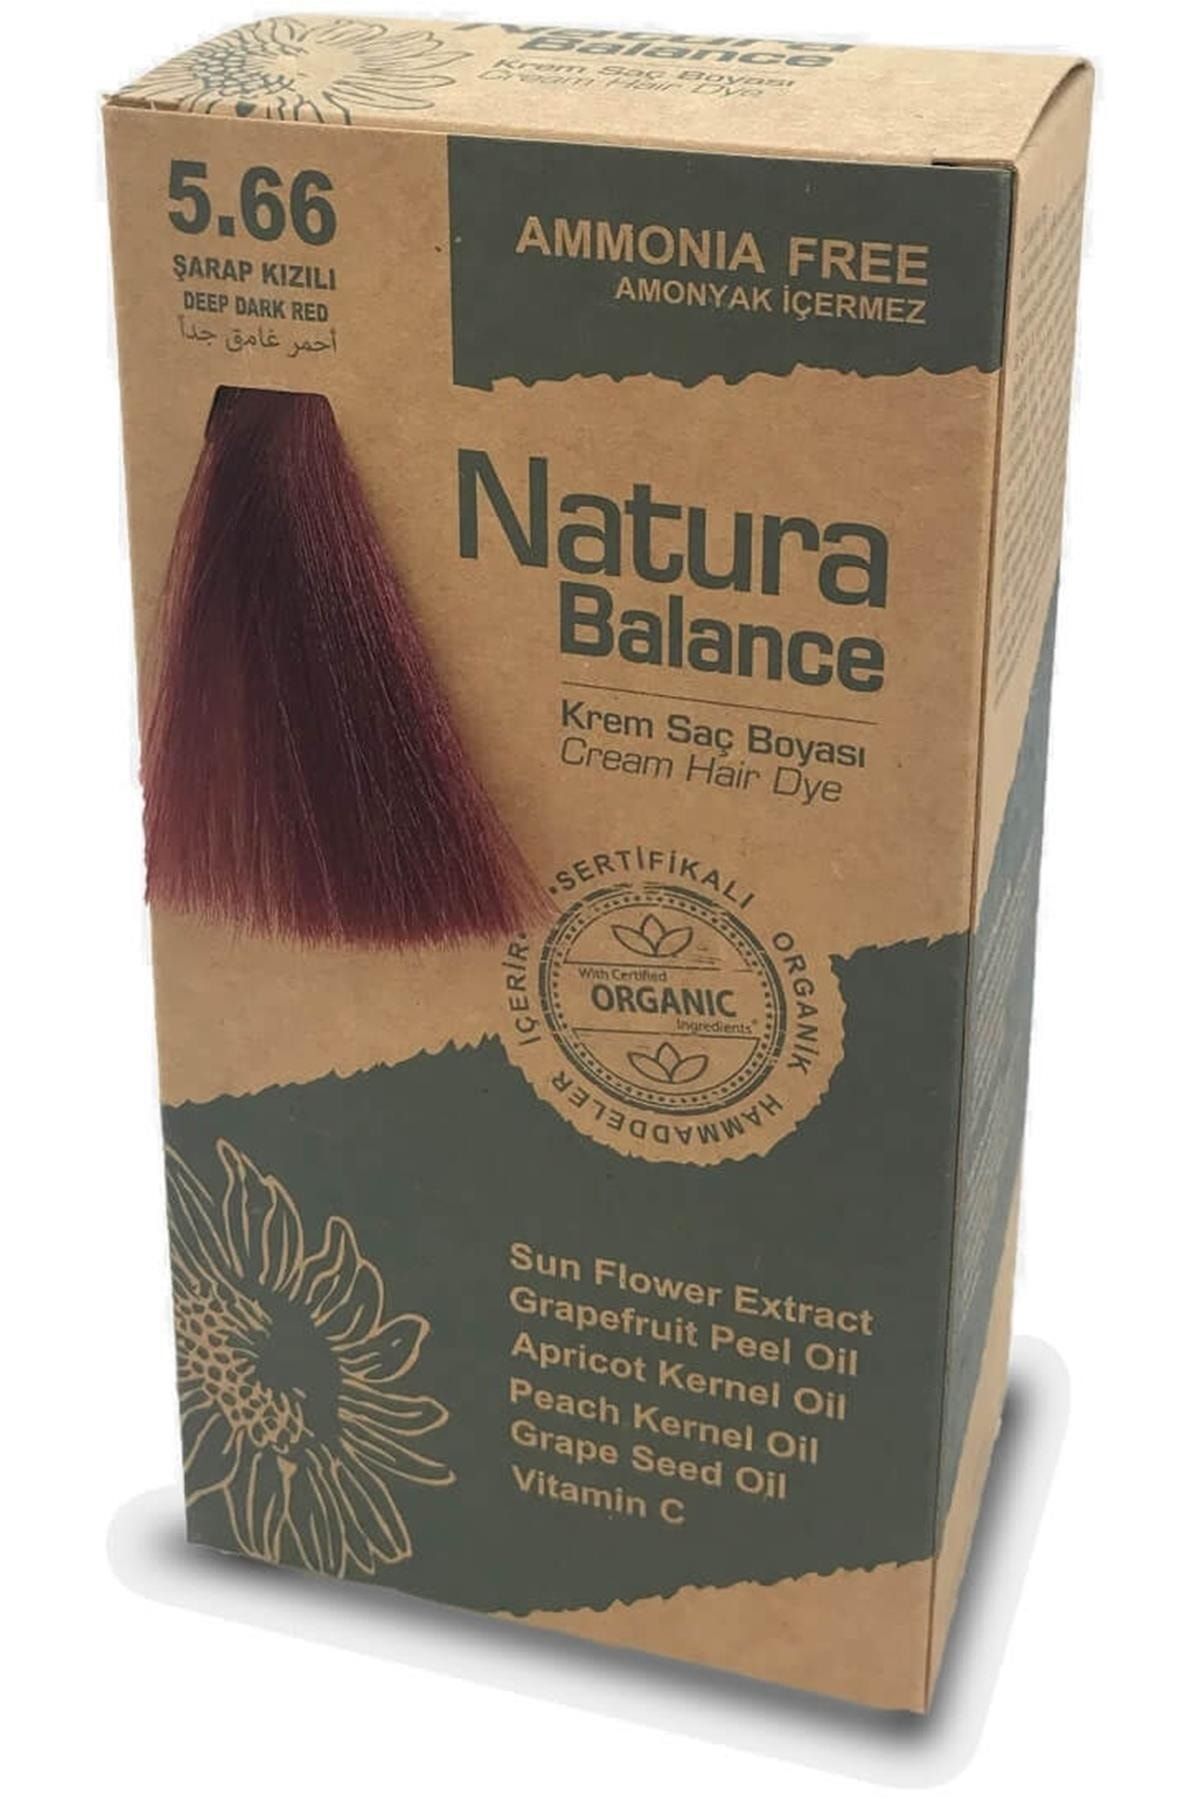 NATURABALANCE Natura Balance Krem Saç Boyası Kızıl 5.66